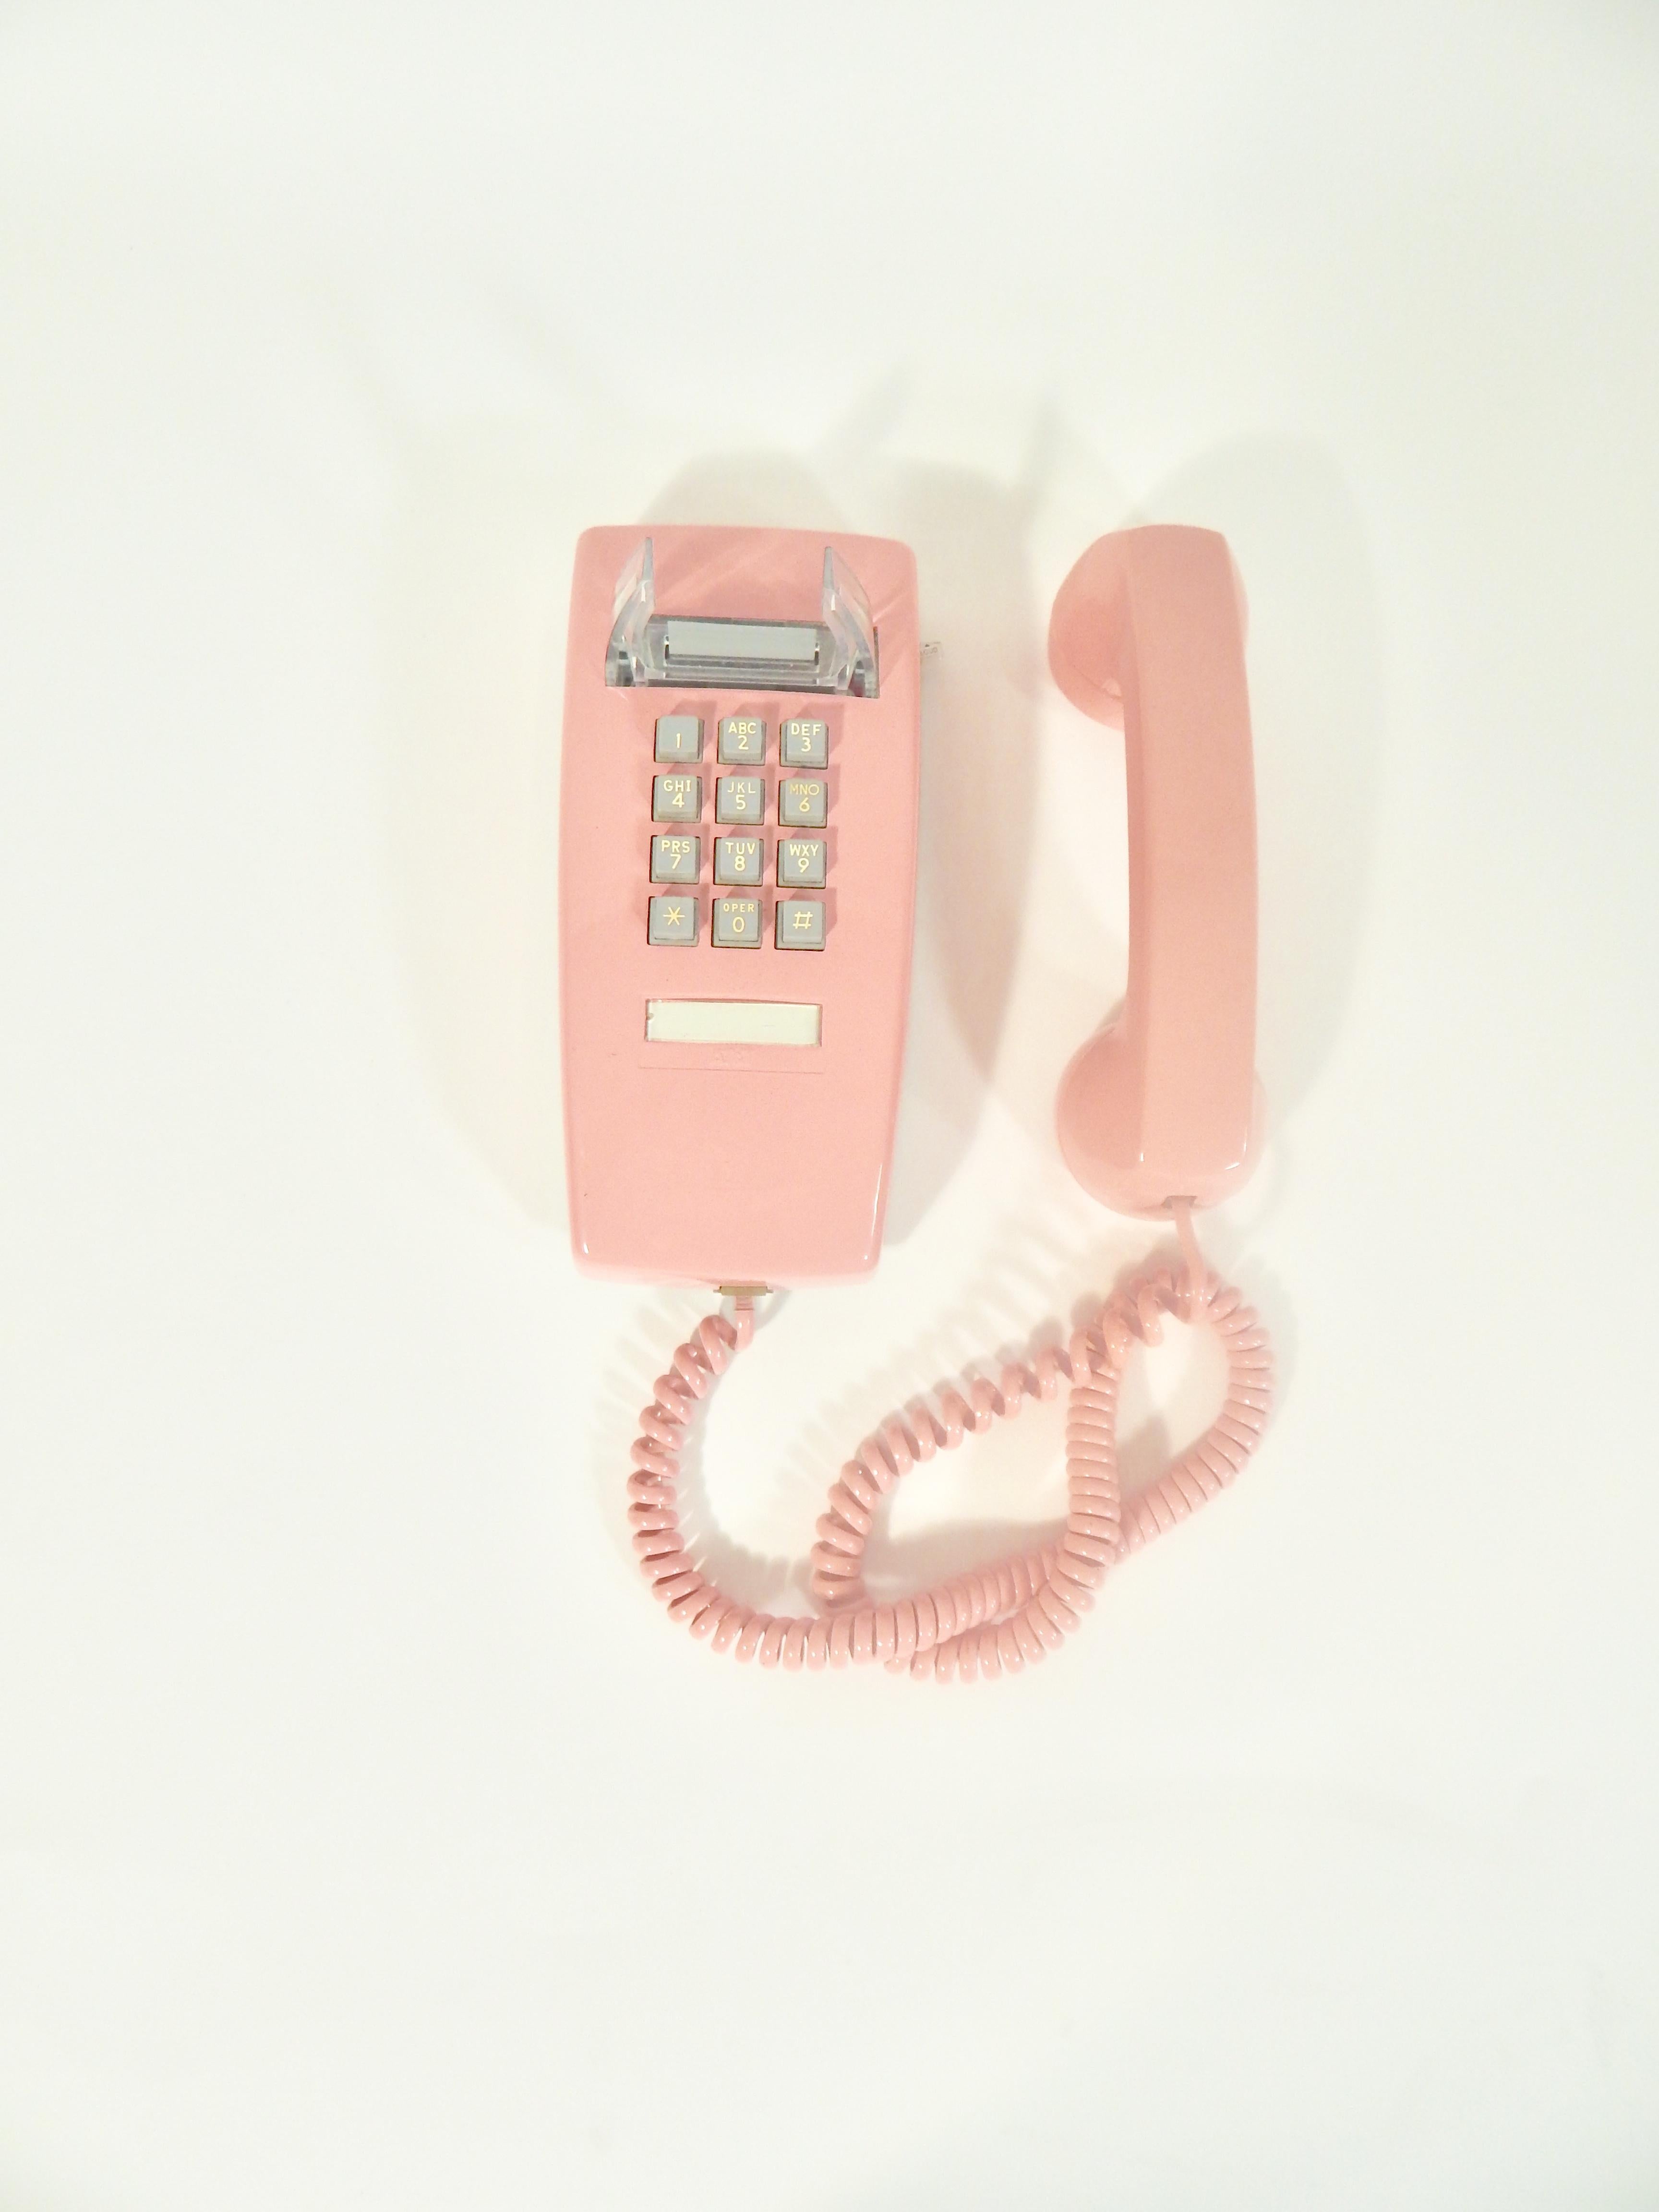 1980s Pink Telephone 1